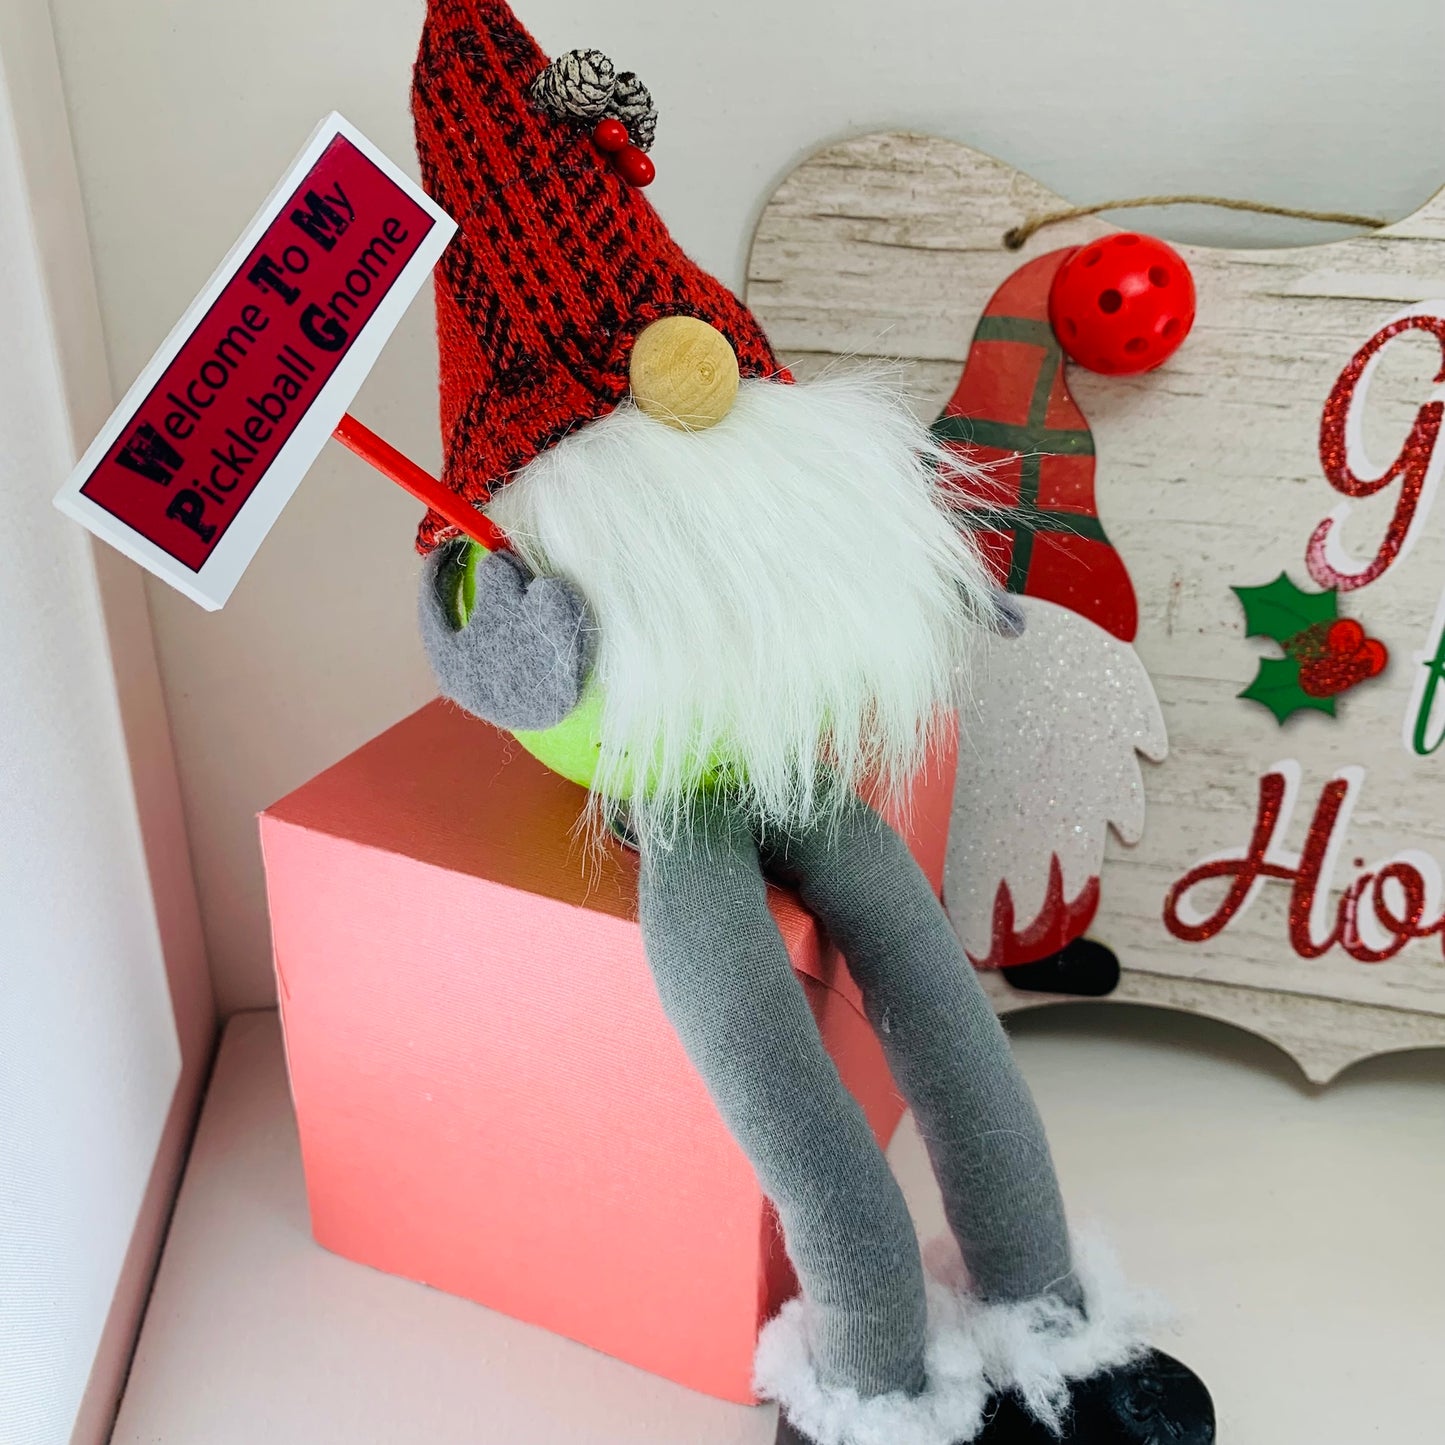 Welcome Home Pickleball Gnomes | Pickleball Christmas Gifts And Decor